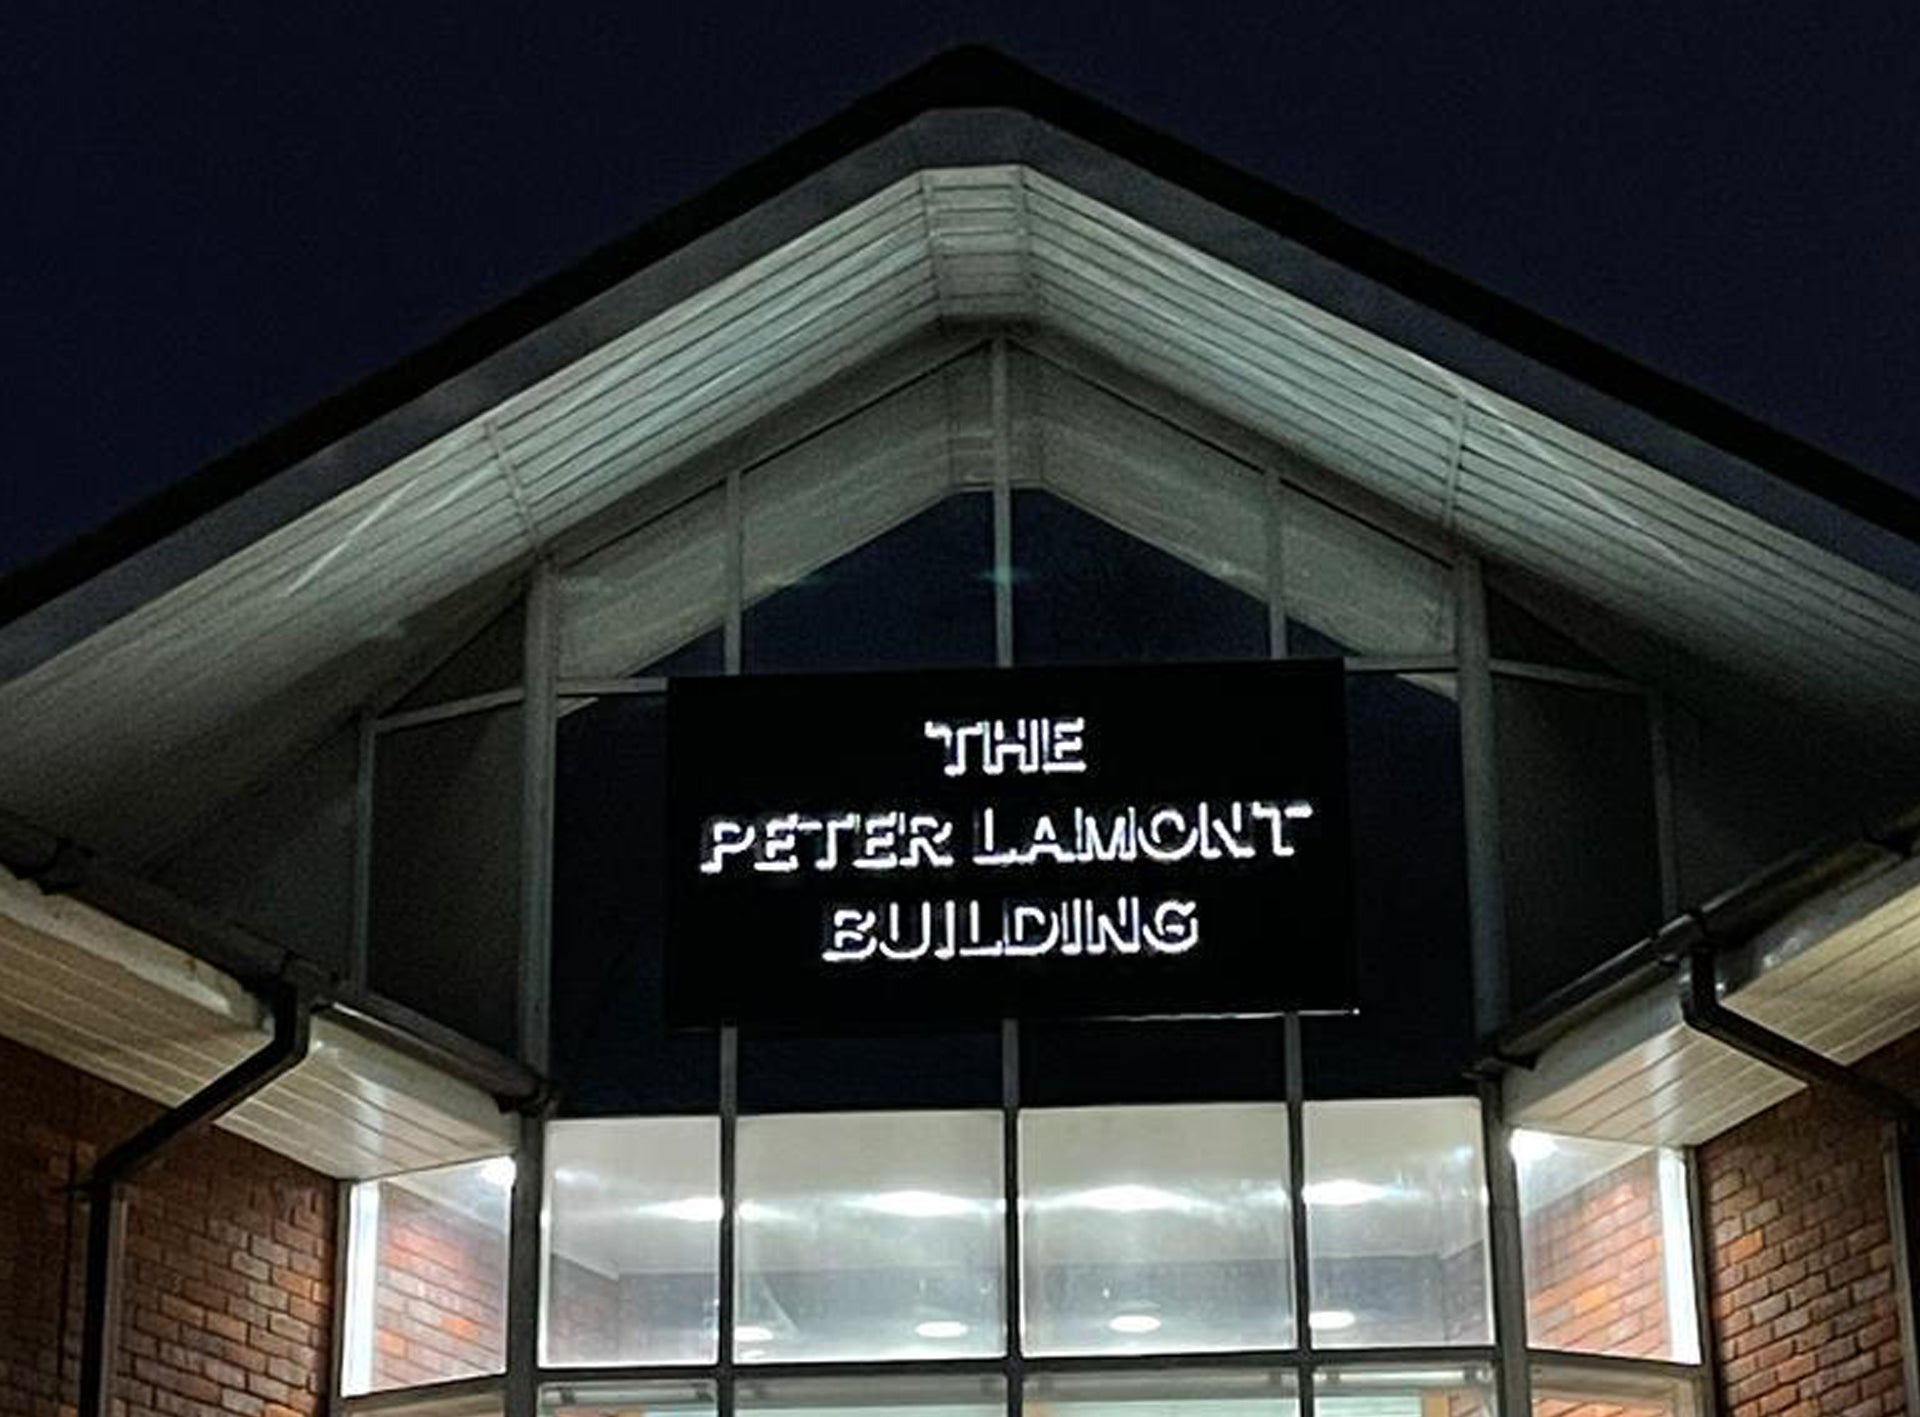 Pinewood Name Building In Honour Of Peter Lamont